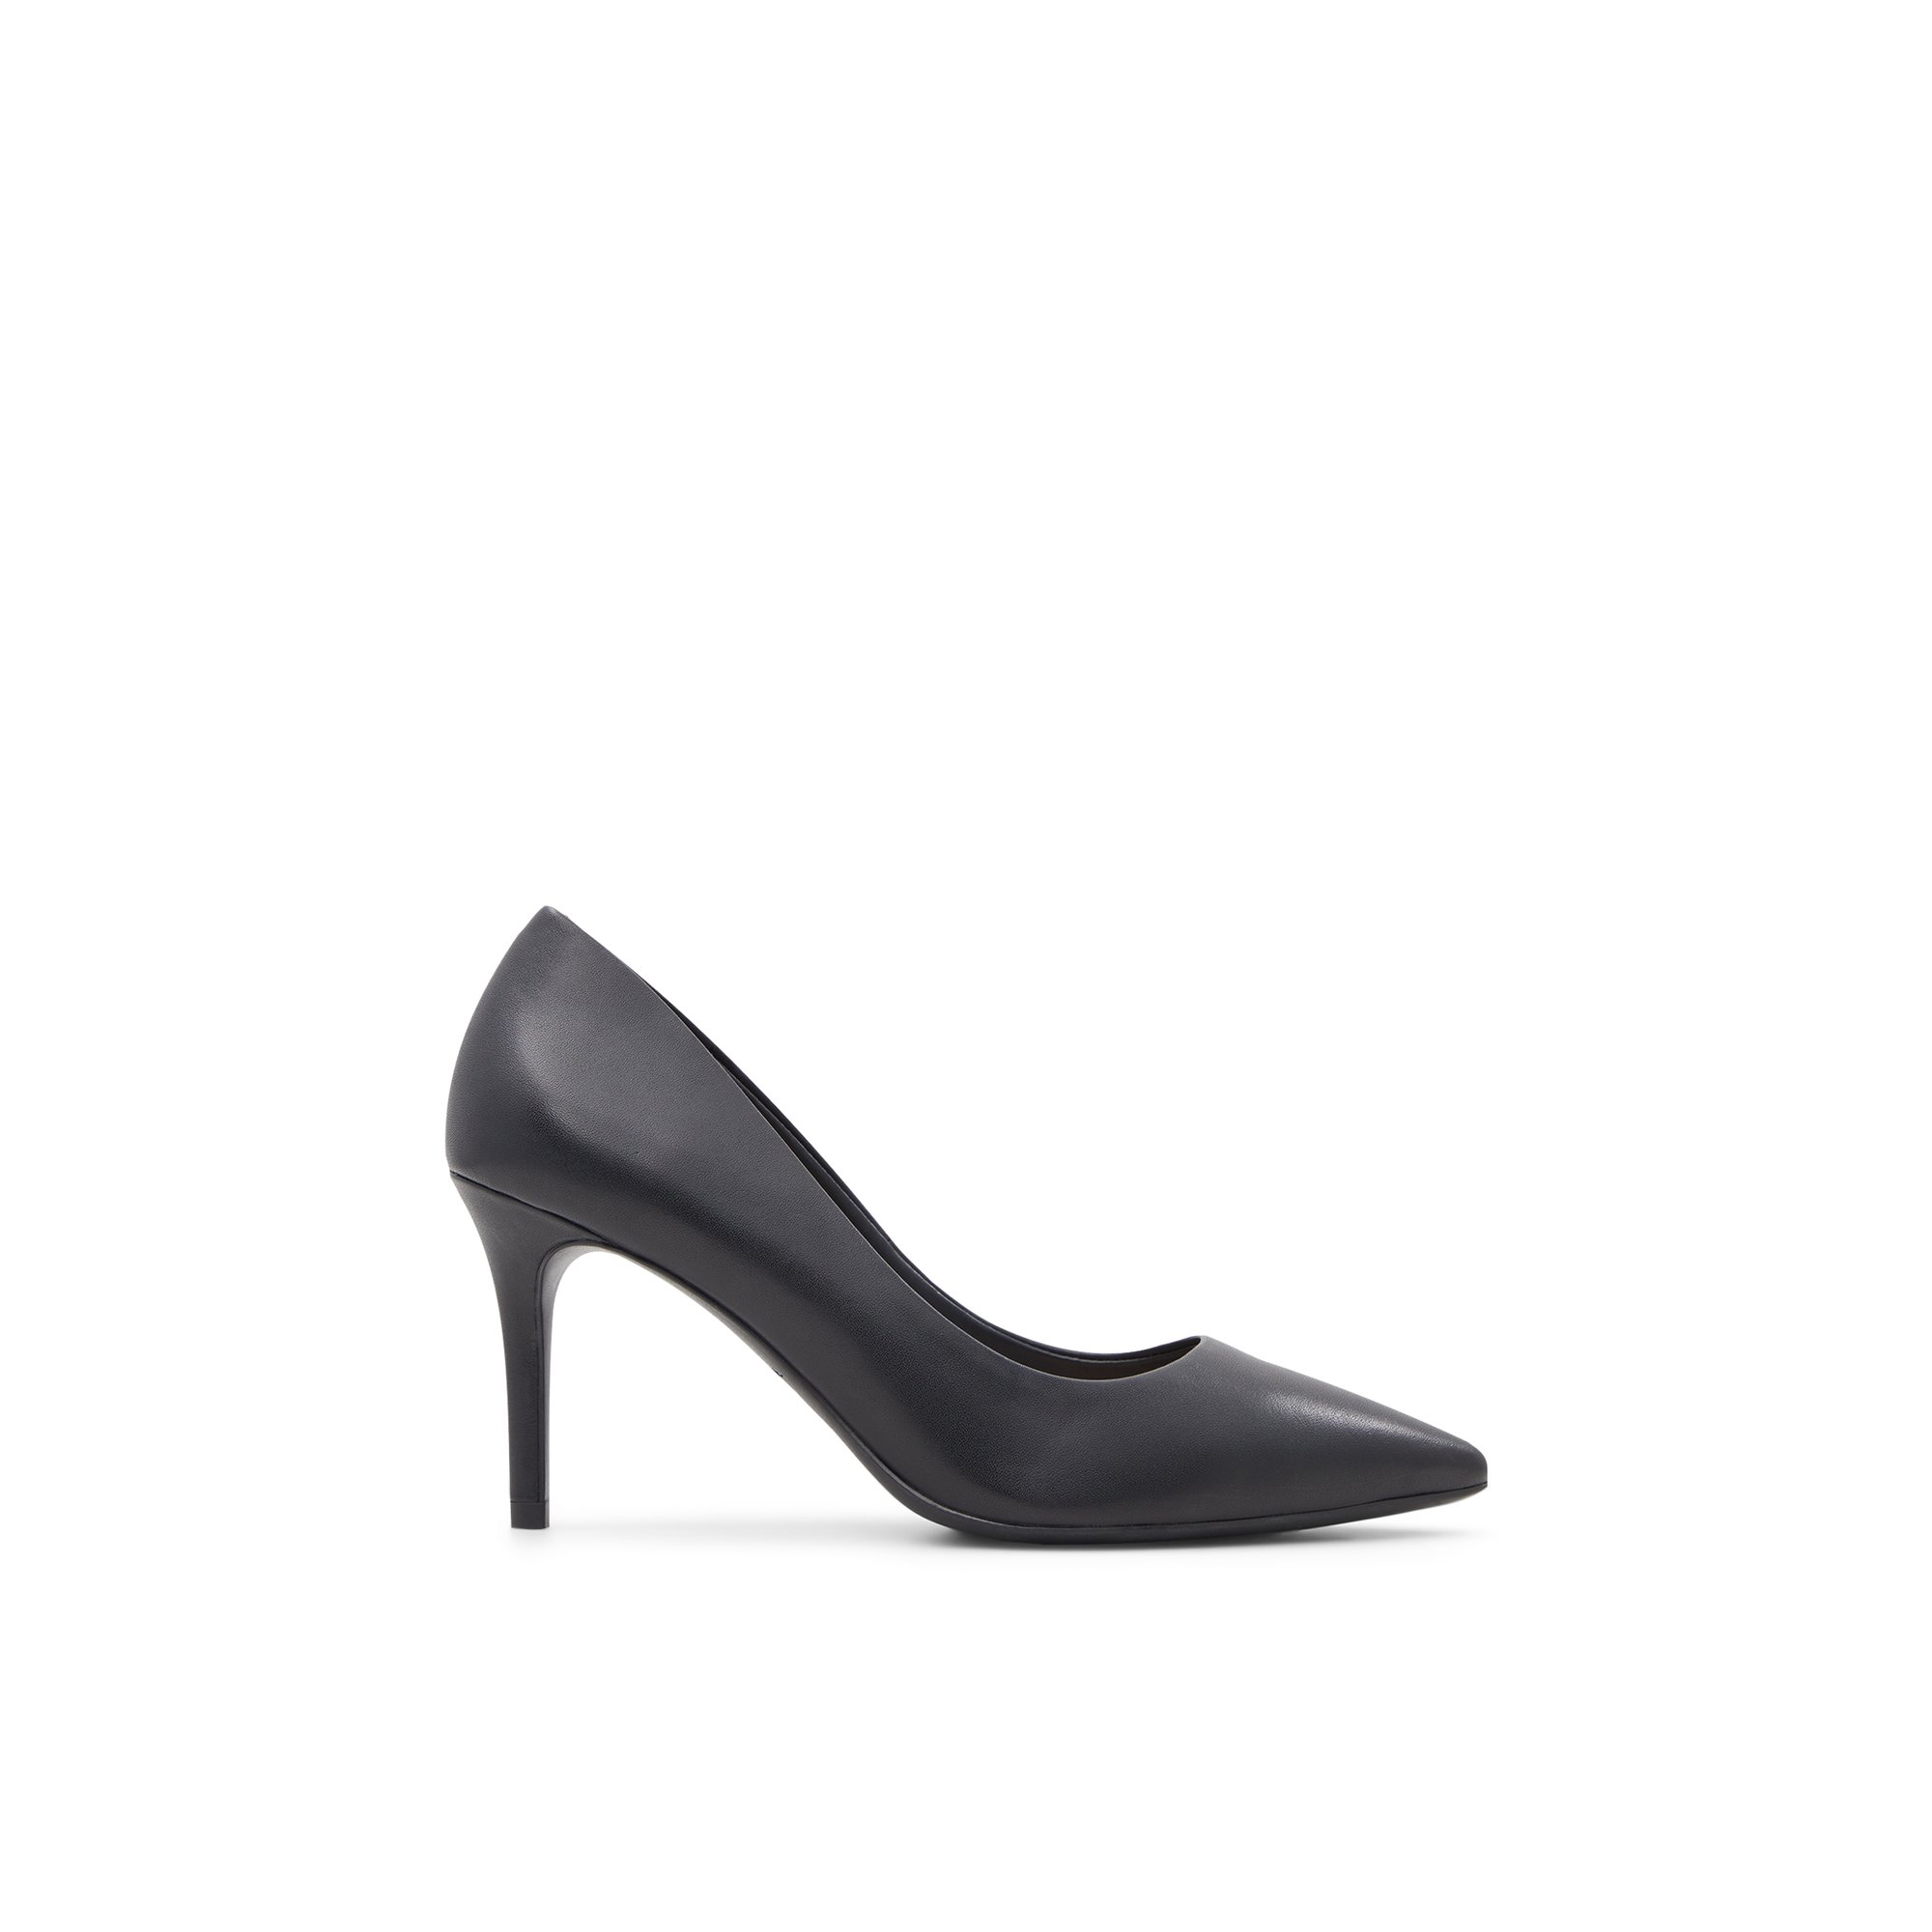 ALDO Sereniti - Women's Pump Heel - Black